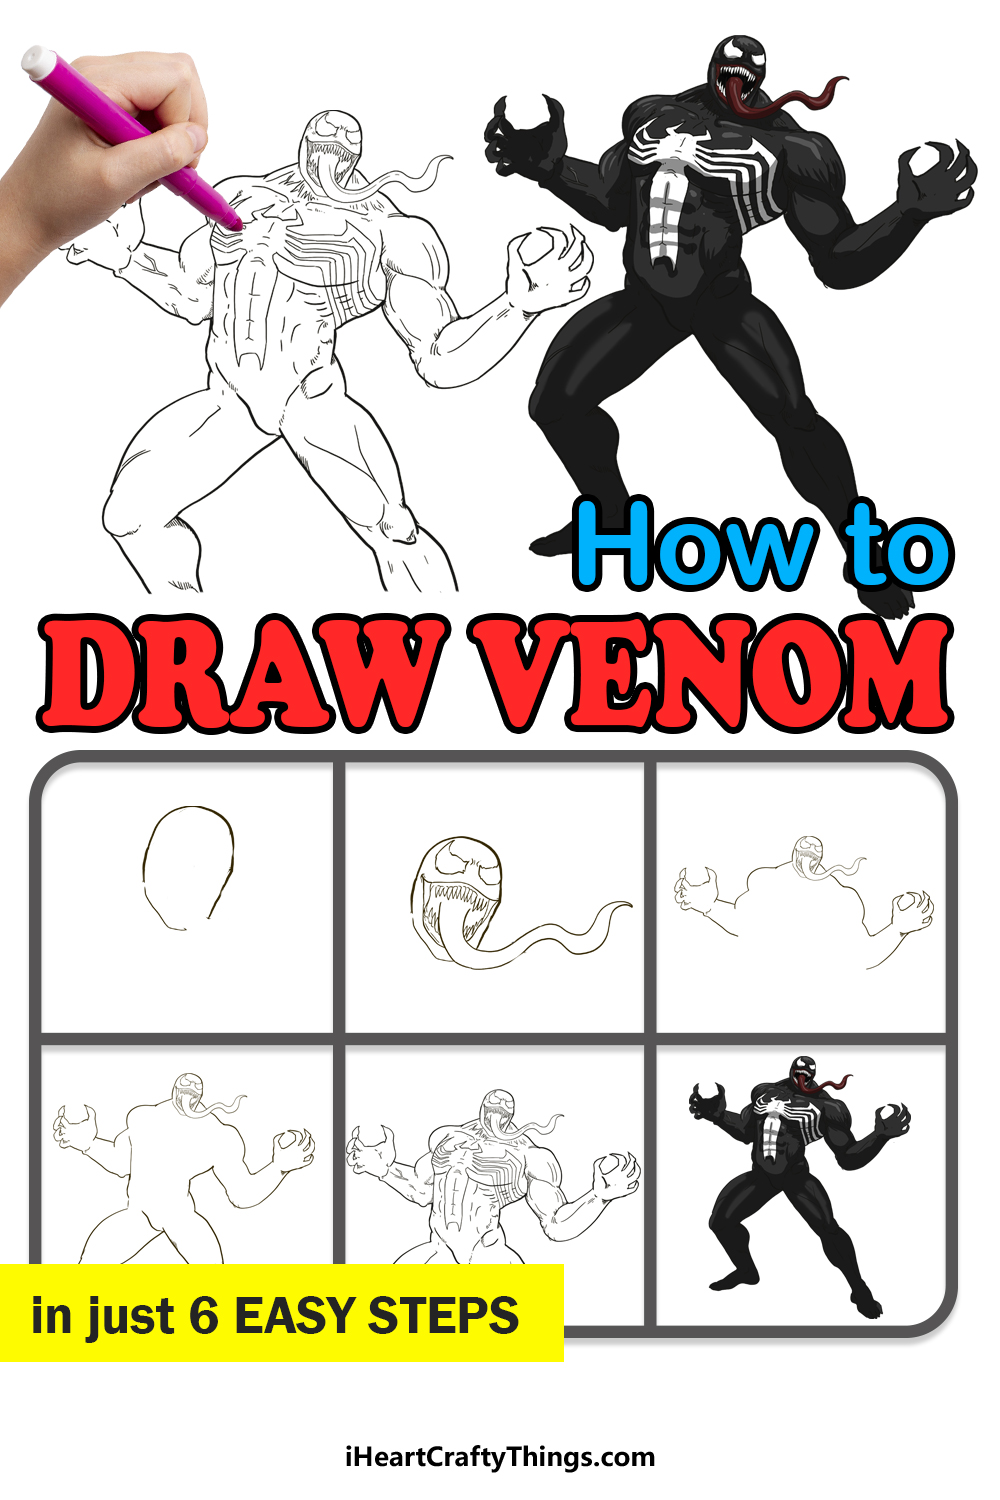 How to Draw Venom step by step guide